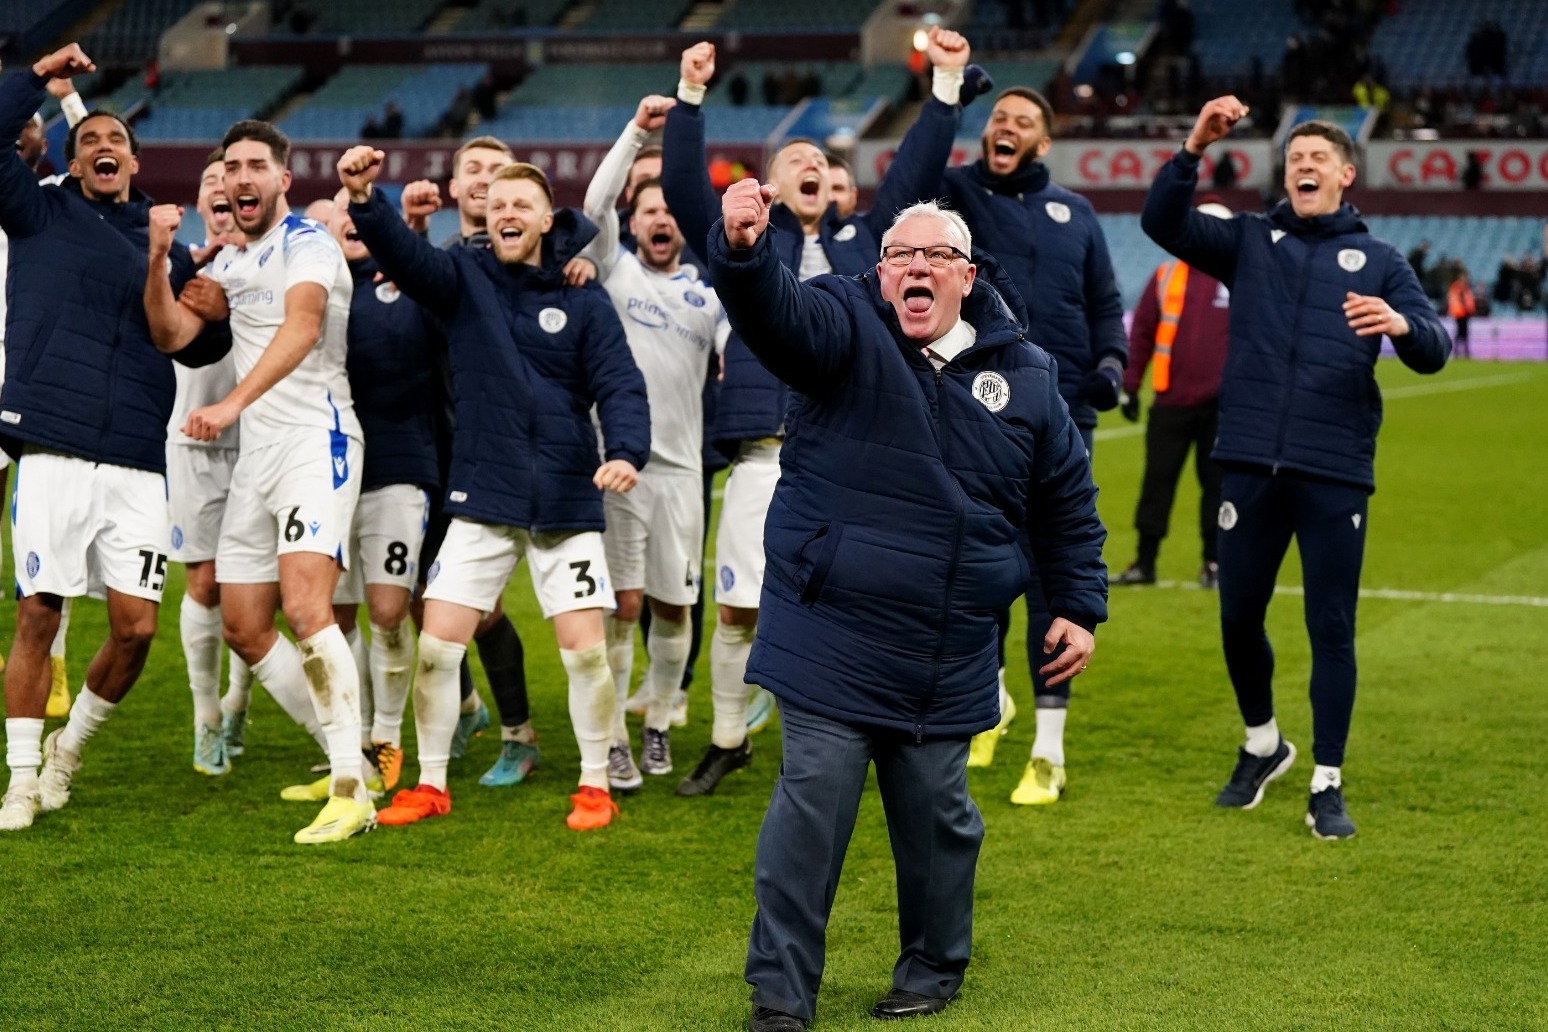 Stevenage claim dramatic FA Cup upset at Aston Villa as Man City cruise through 